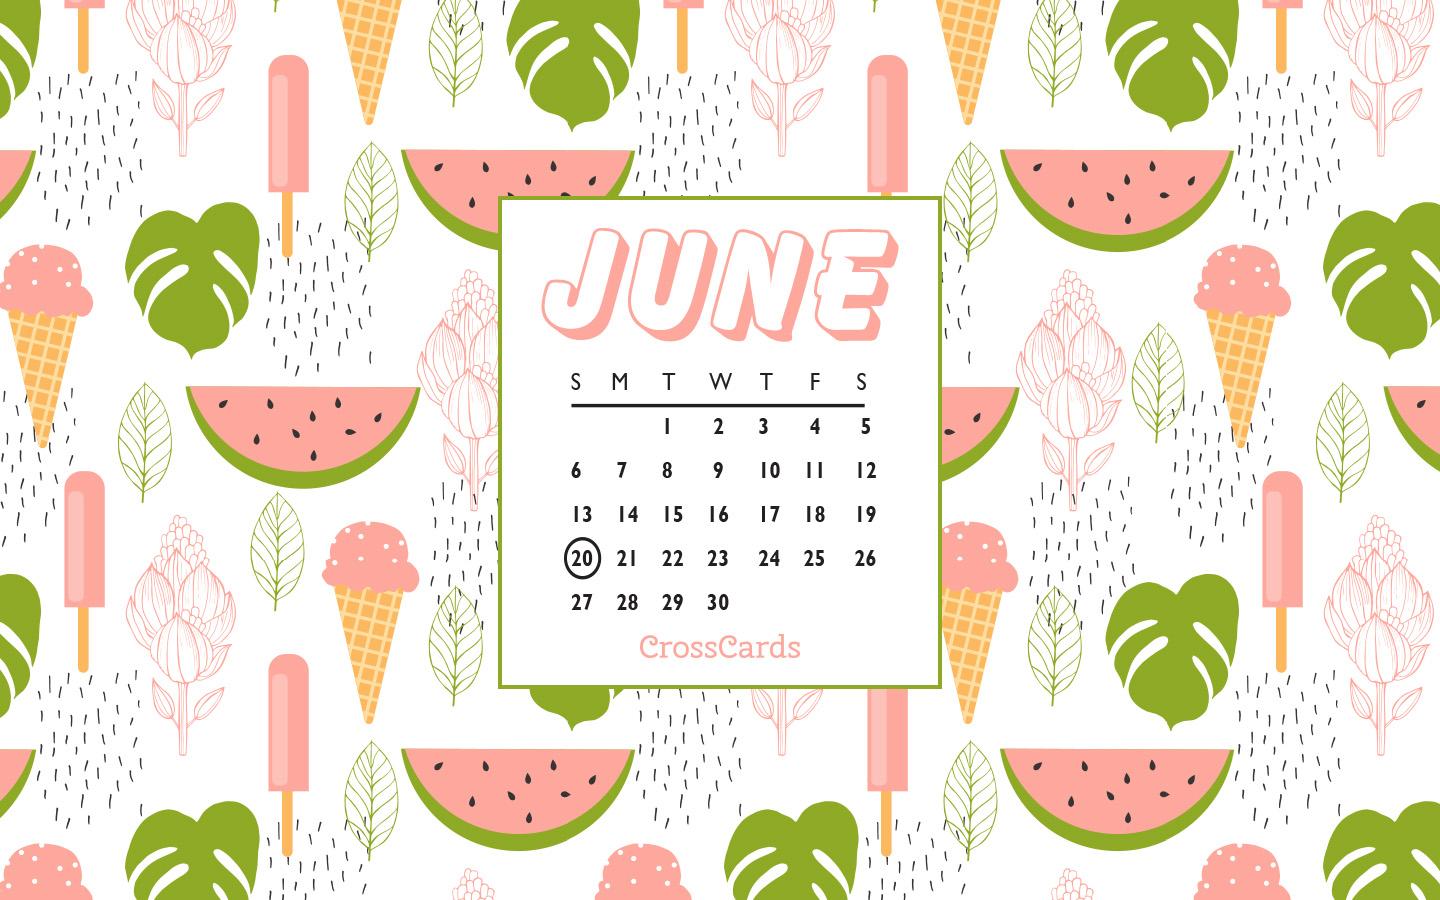 June 2021 wallpaper calendars  30 FREE cute and colorful options